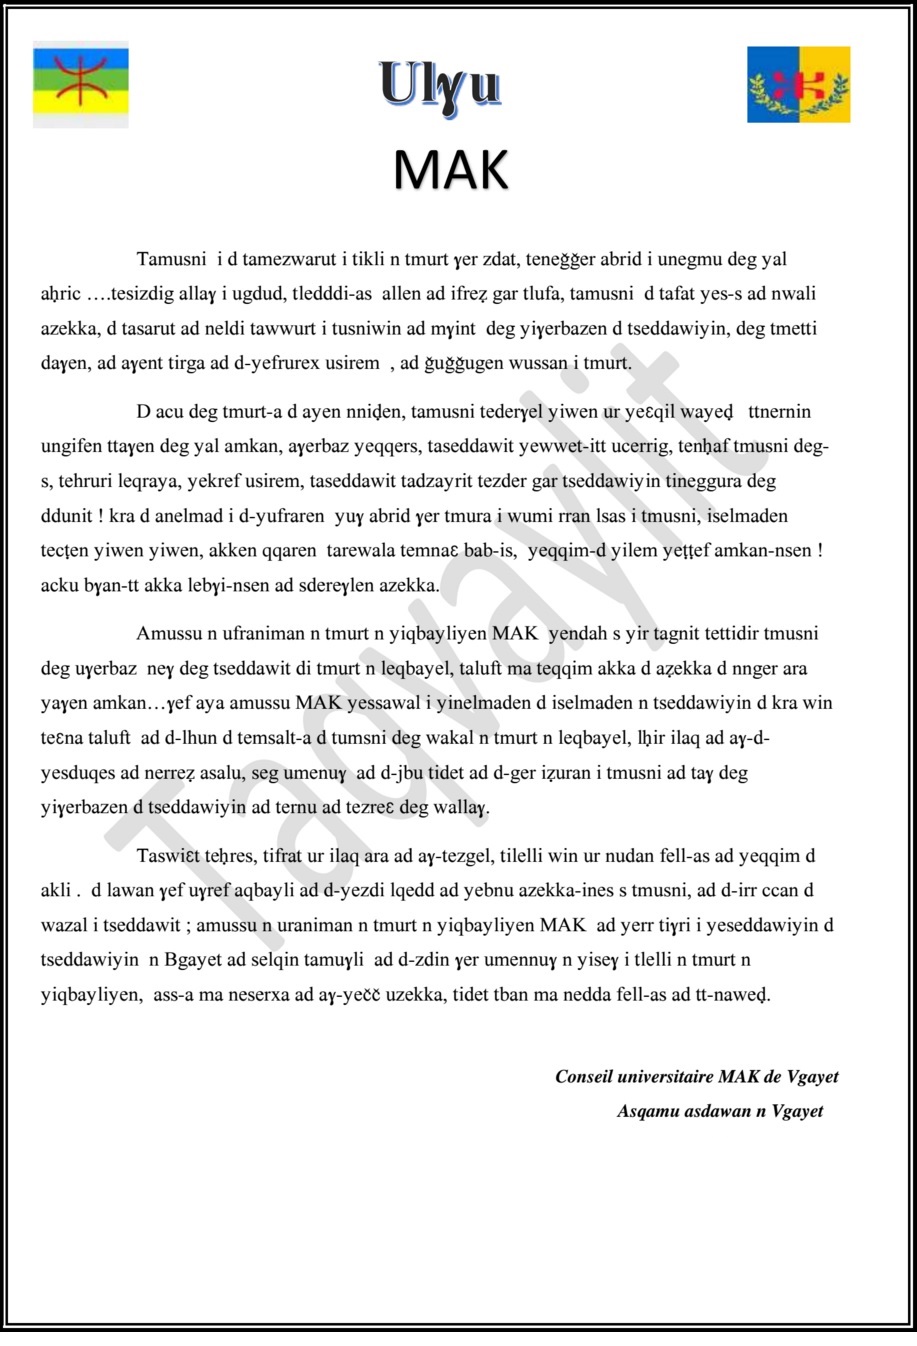 Déclaration du Conseil universitaire MAK de Vgayet : Asqamu asdawan n Vgayet : Tamusni i d tamezwarut